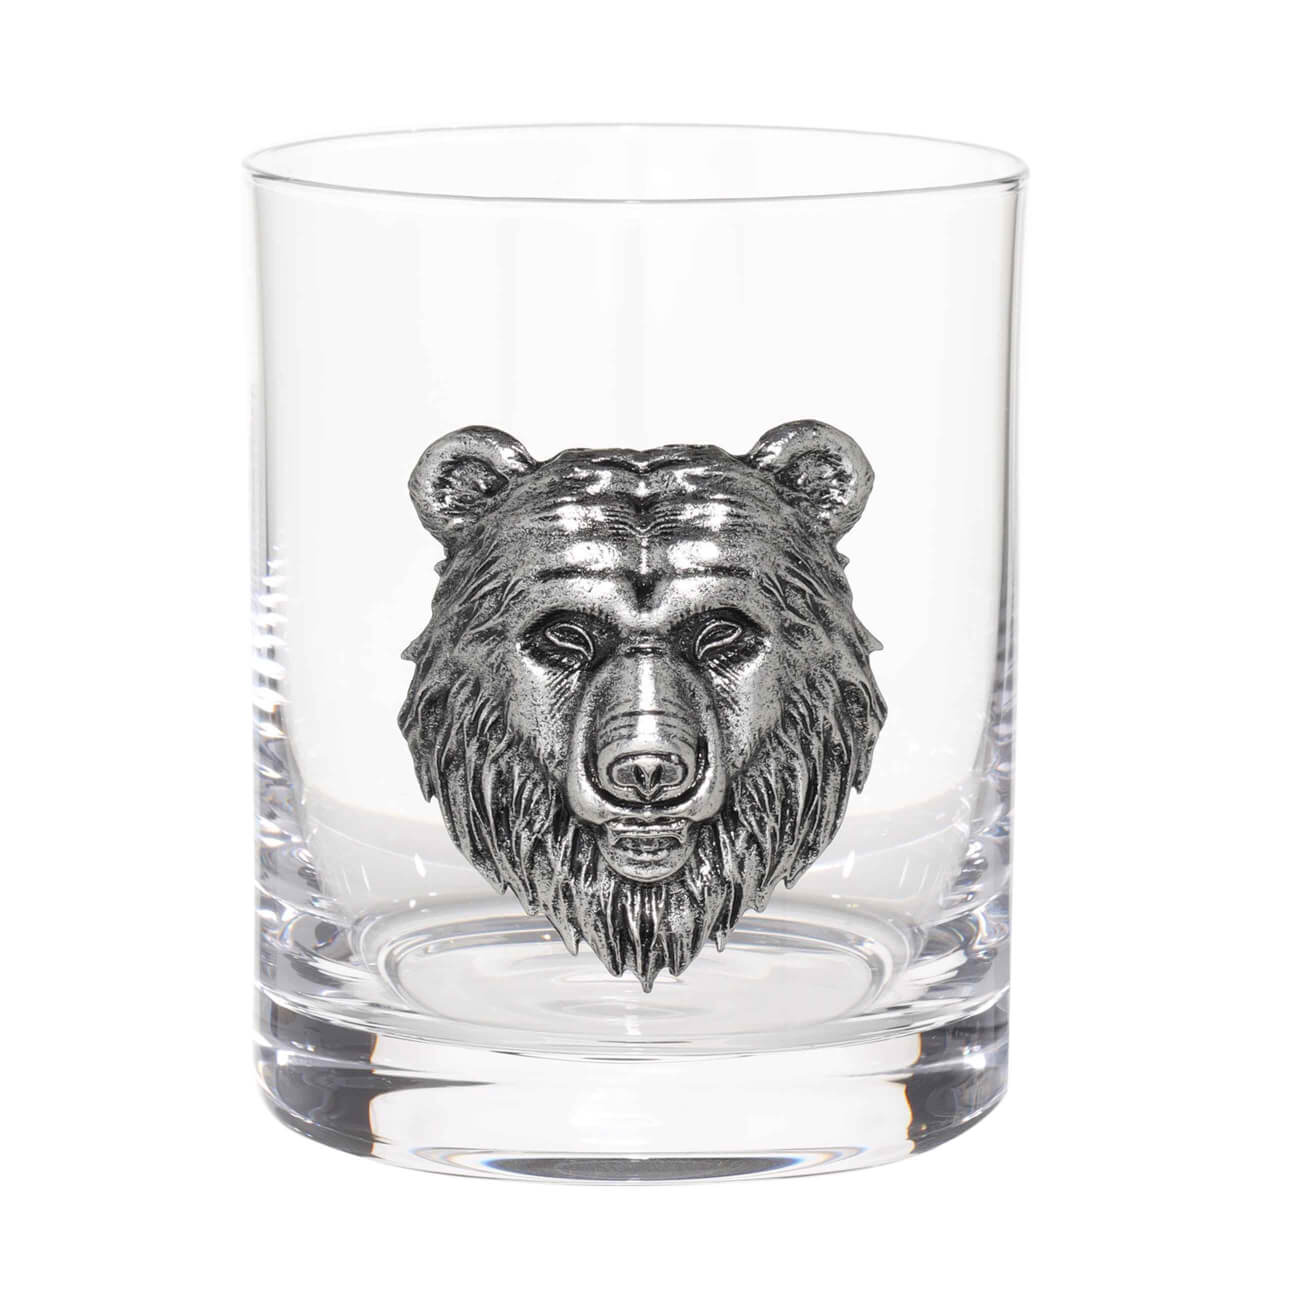 Стакан для виски, 10 см, 340 мл, стекло/металл, серебристый, Медведь, Lux elements